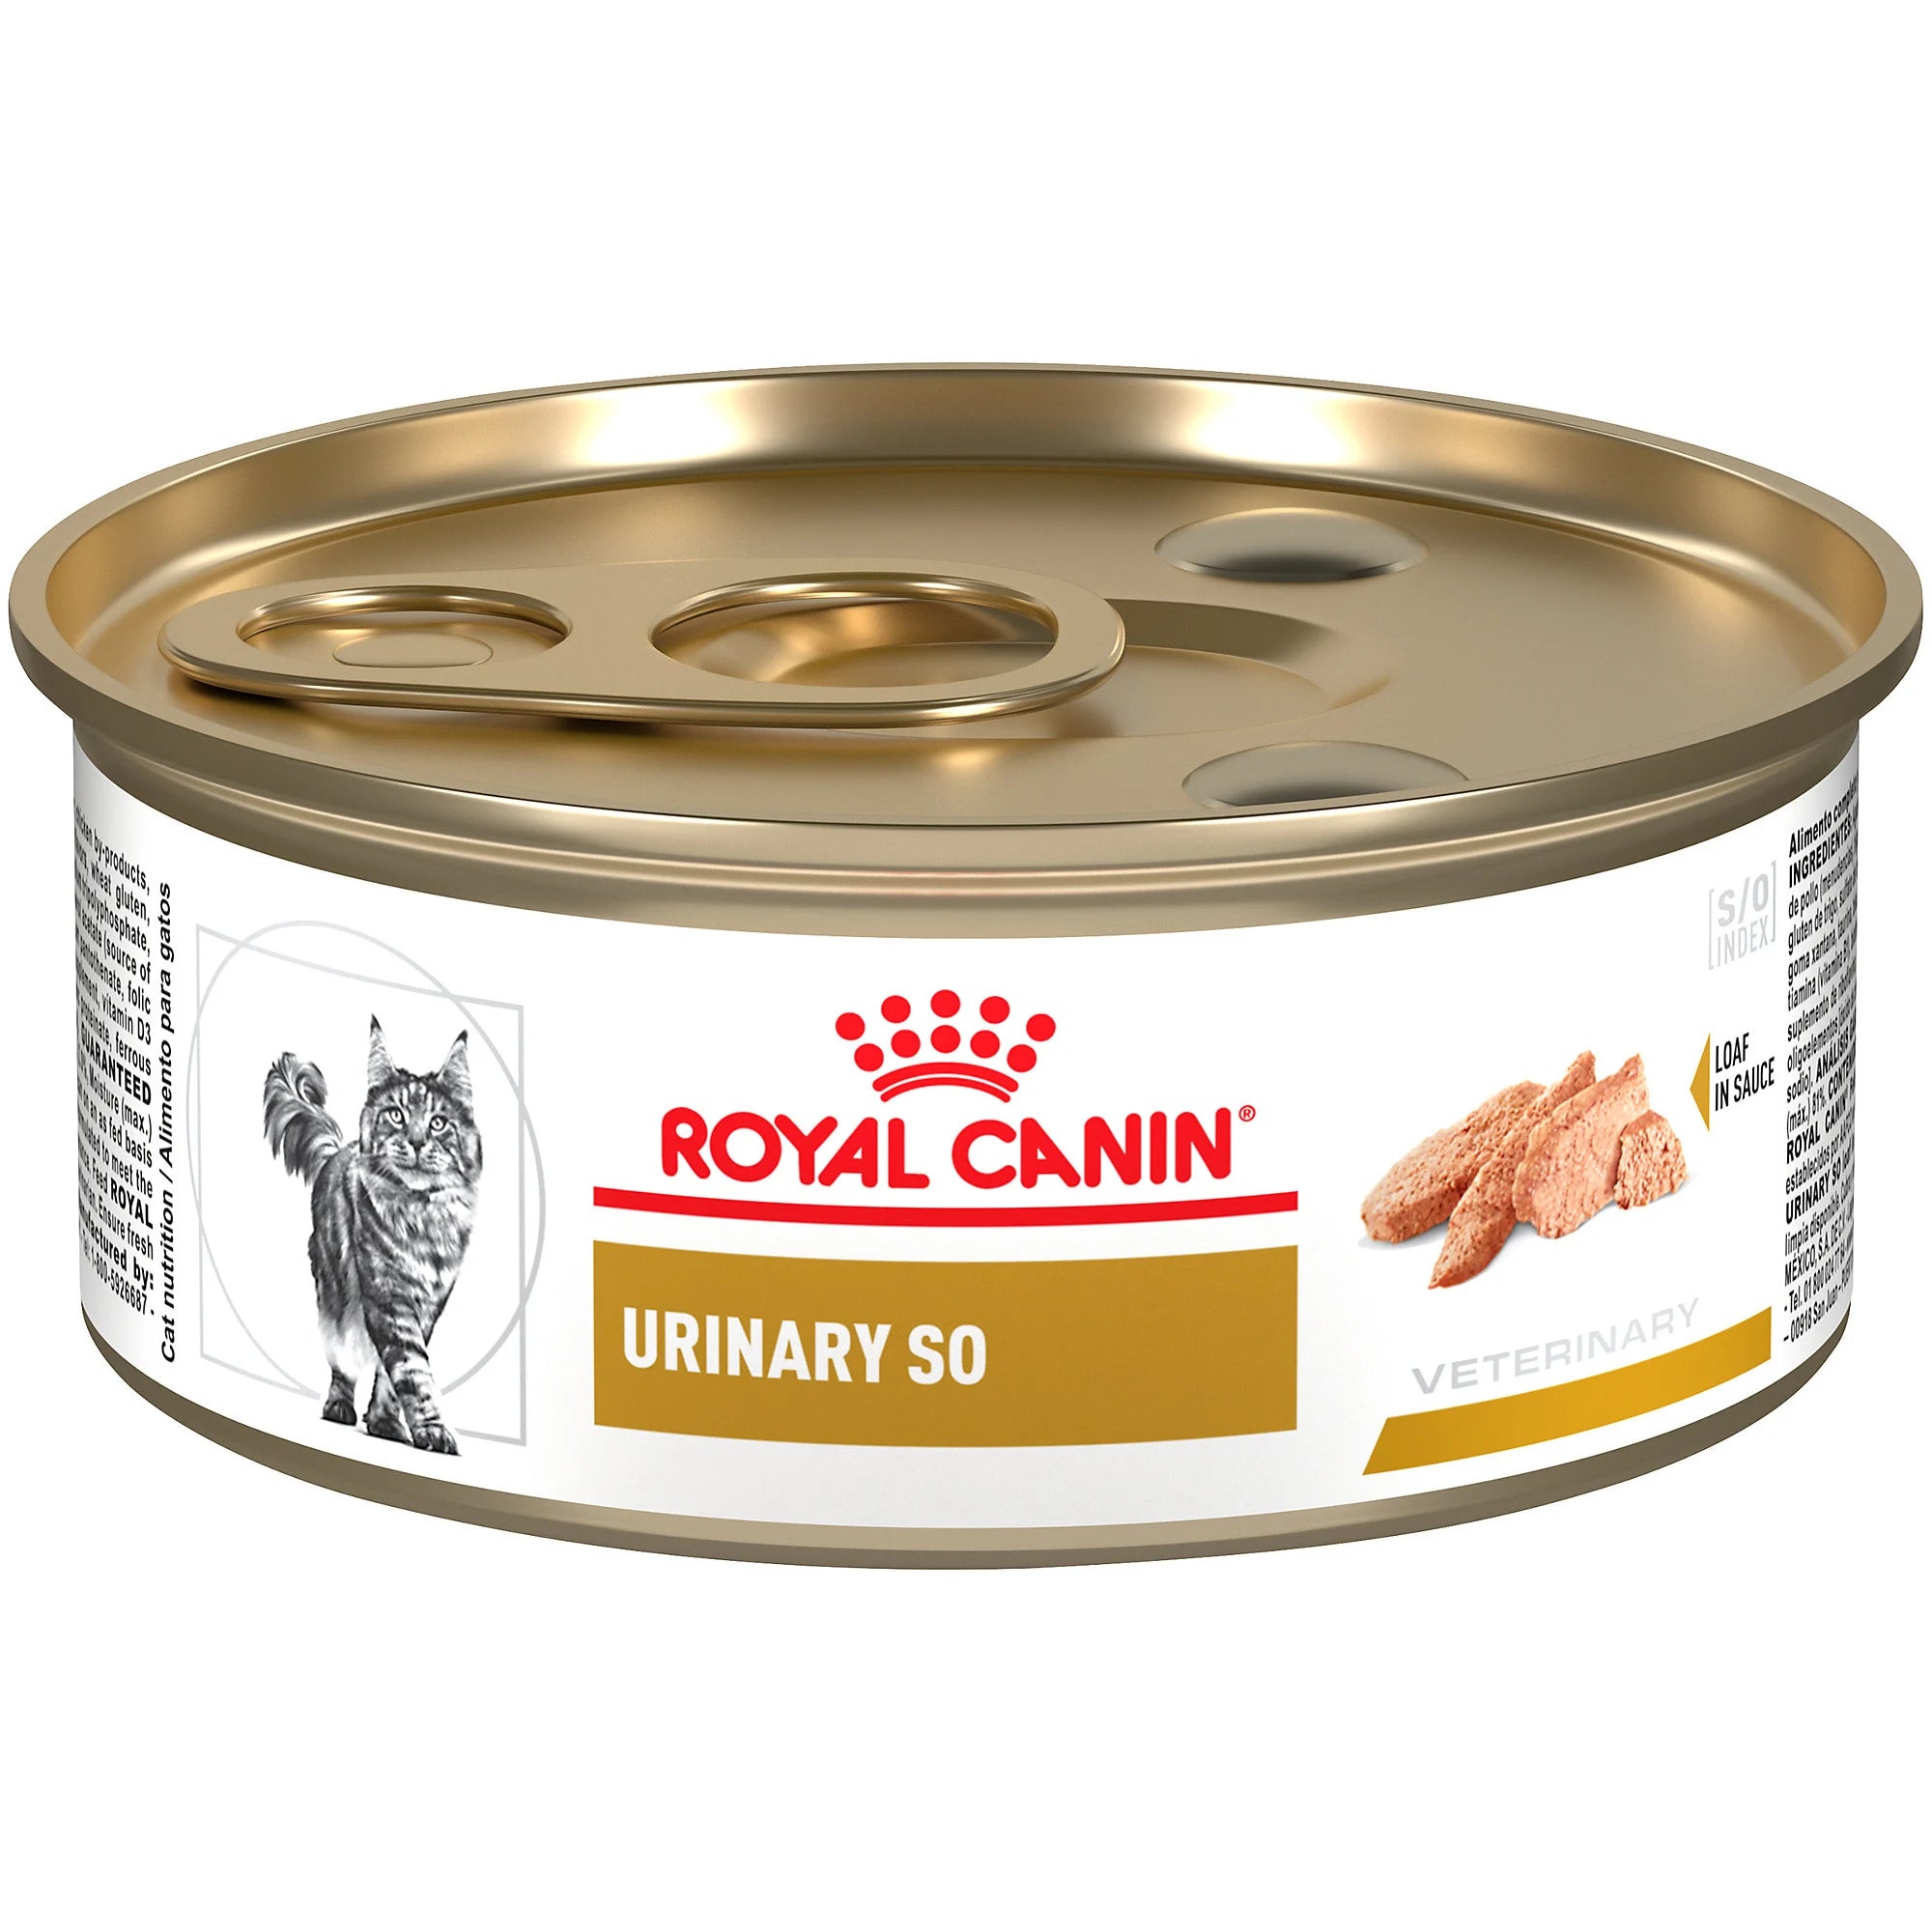 Royal Canin Urinary SO Feline (per can)